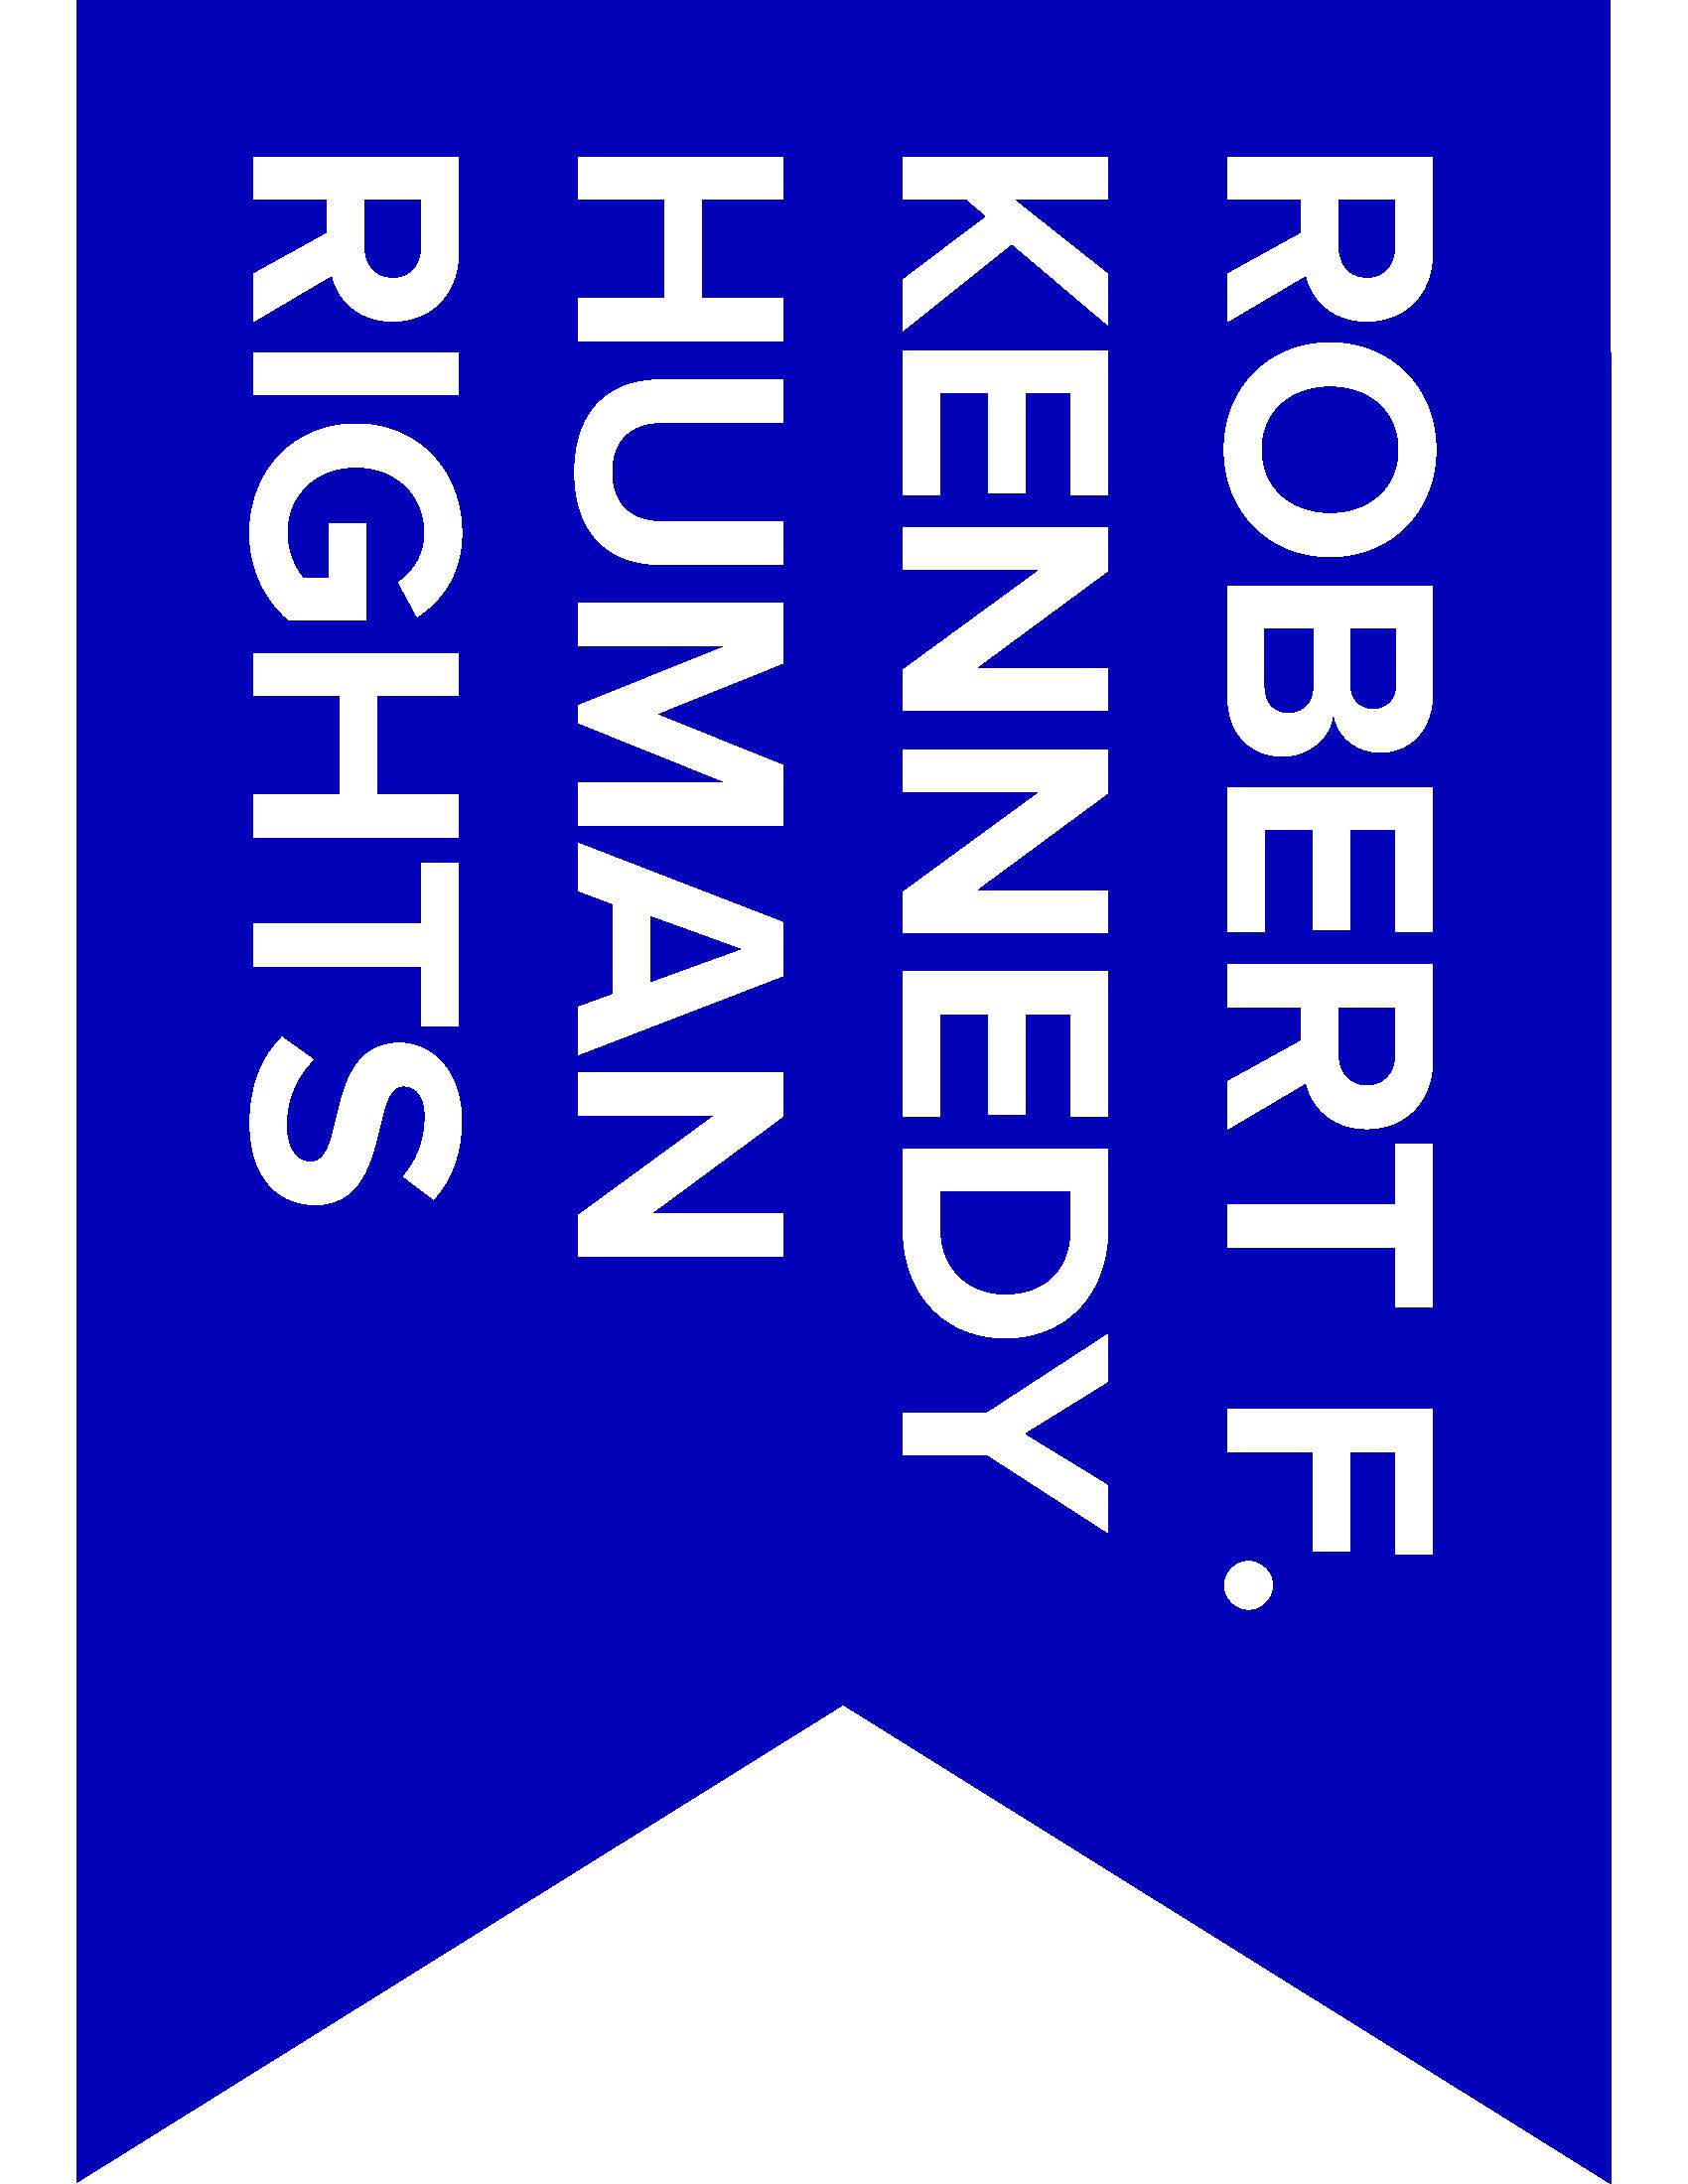 RFKHR Logo RGB